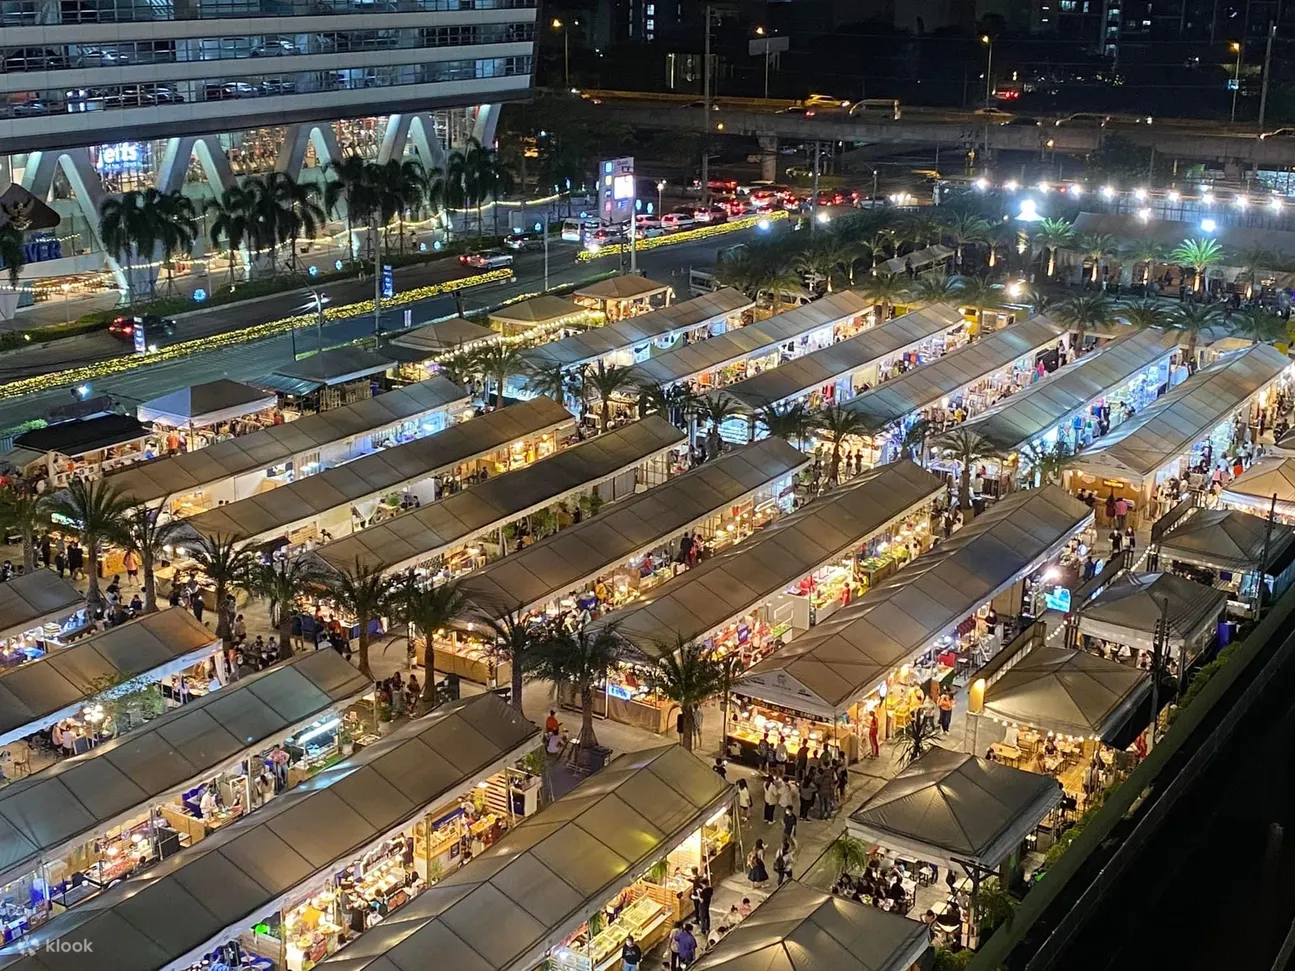 Jodd Fairs DanNeramit Night Market in Bangkok 2023 - CK Travels